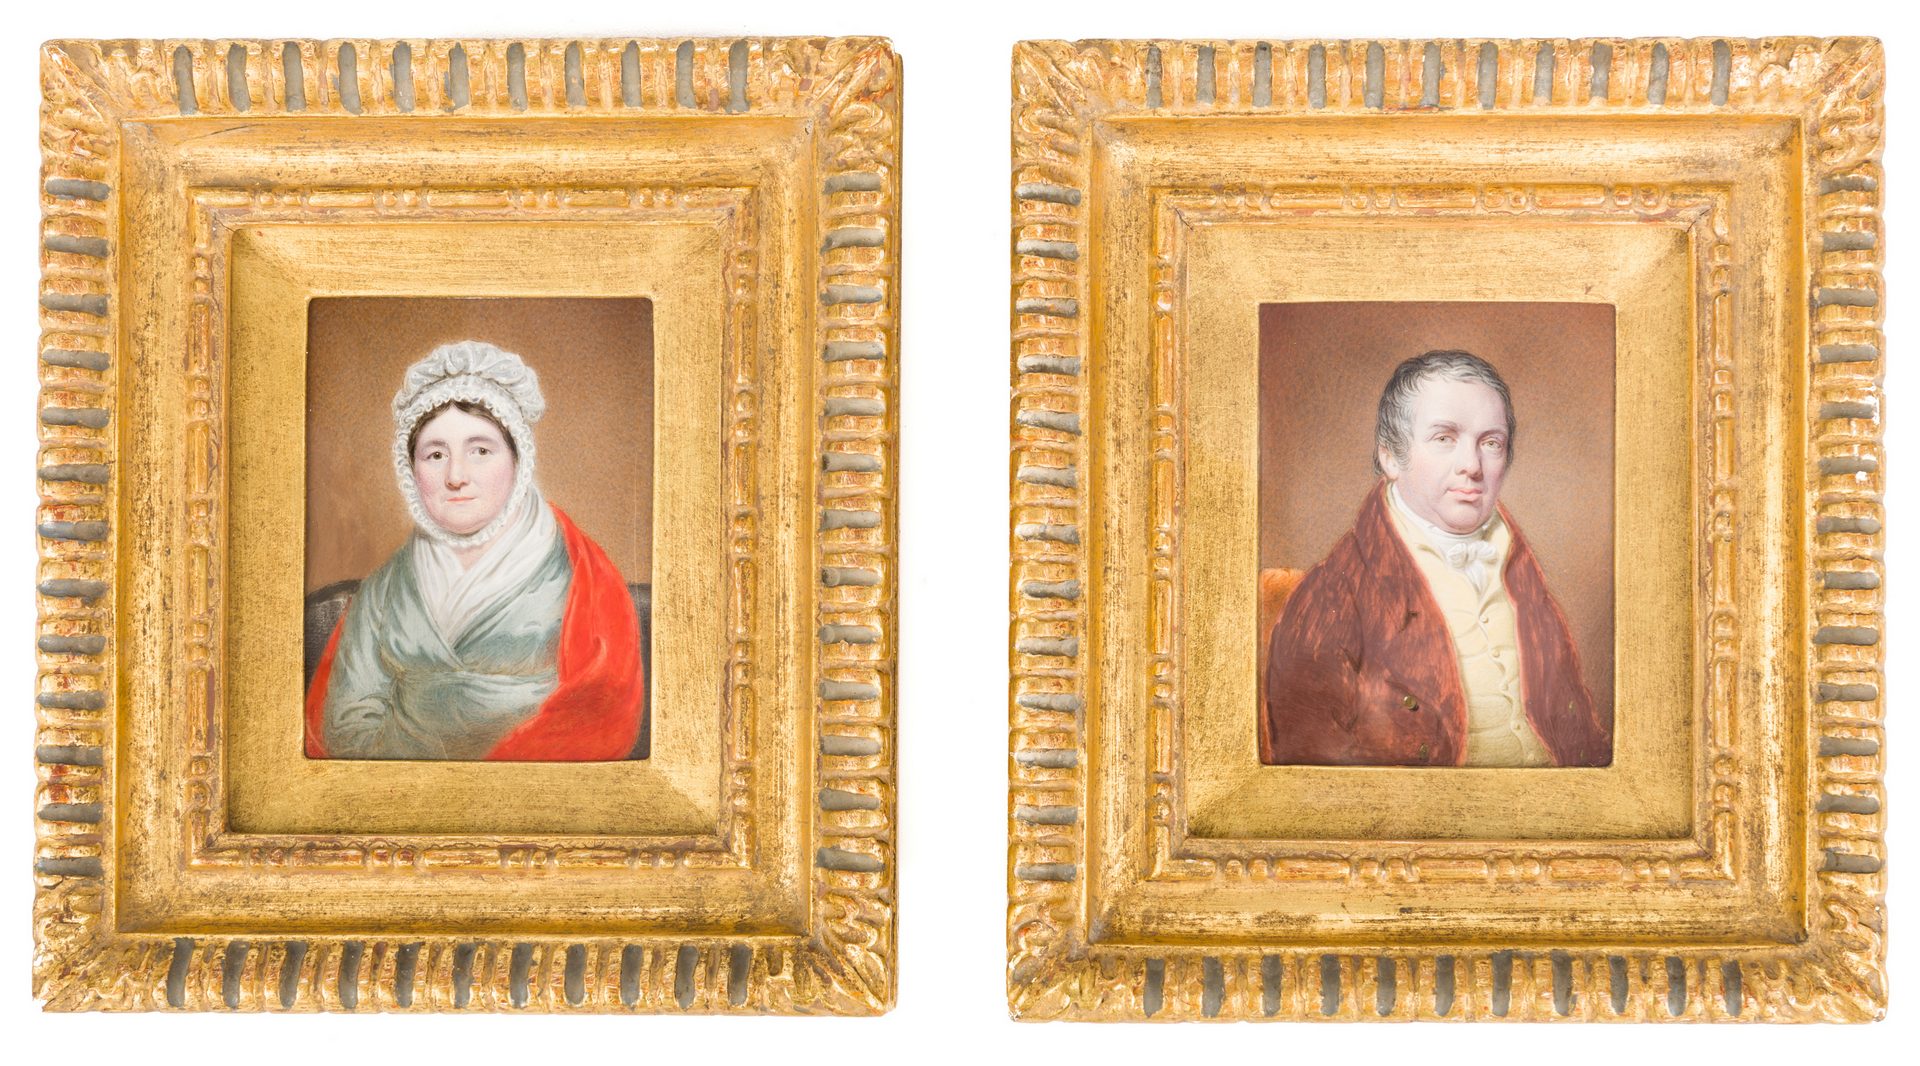 Lot 166: Pair of Miniature Portraits, 19th century